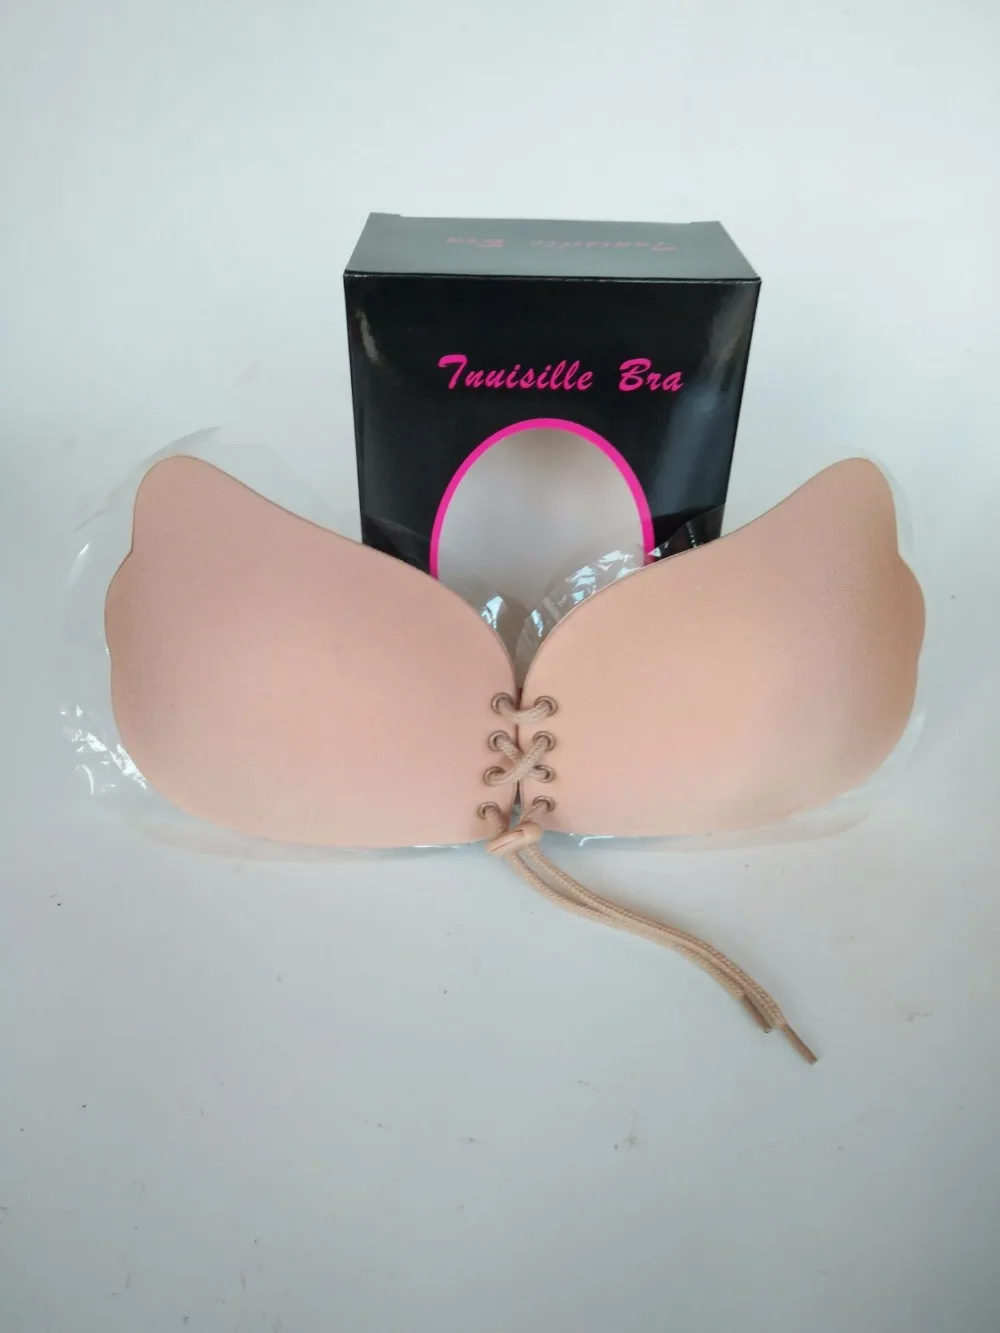 MUKATU Invisible Bra Seamless Sticky Adhesive Strapless Bra Backless Bralette Silicone Fly bra Bralett Push up Bras for Women 24